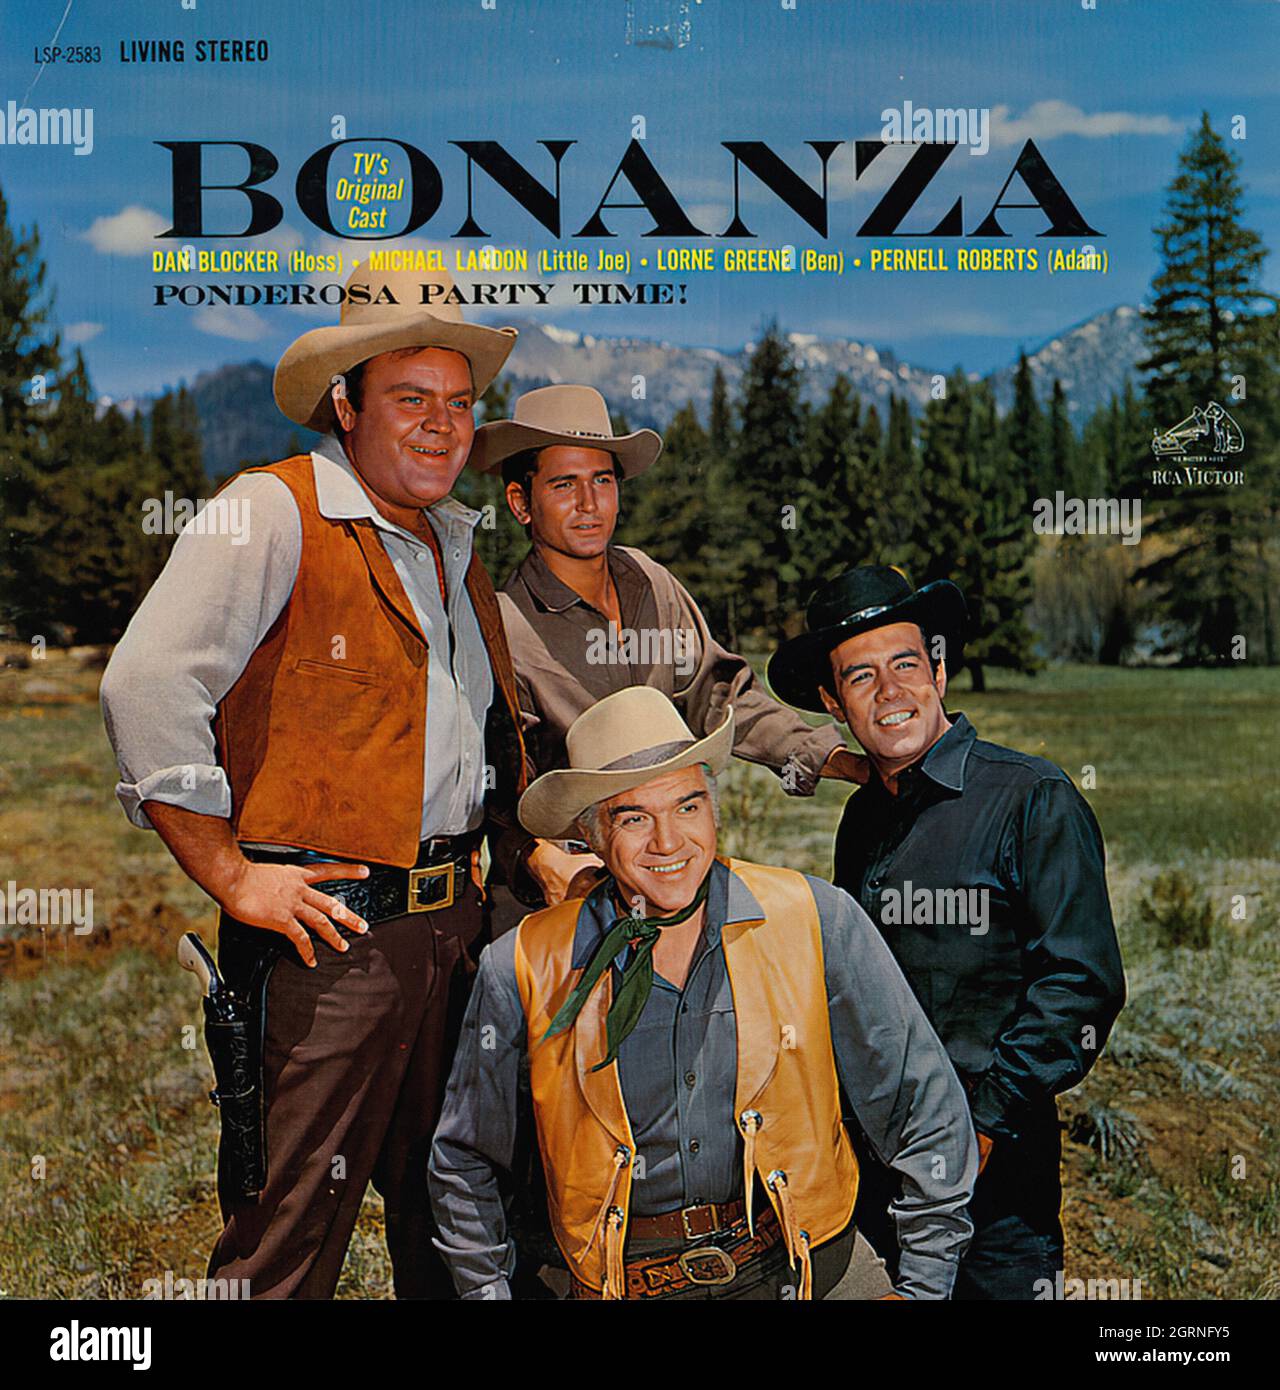 Bonanza Ponderosa Party Time! - Vintage Soundtrack Vinyl Album Stock Photo